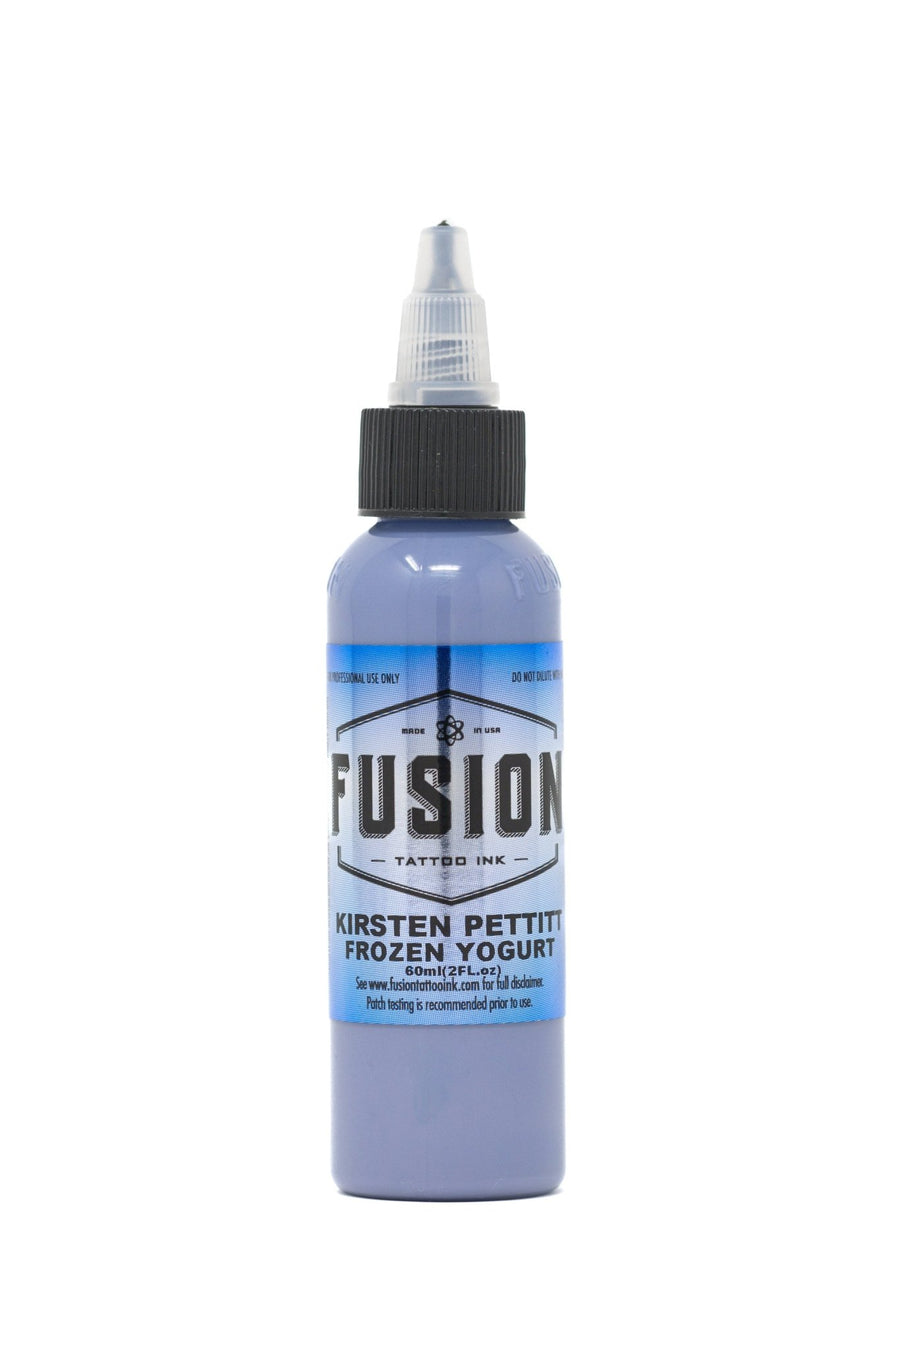 Fusion - Kirsten Pettitt's Frozen Yogurt from Fusion Tattoo Ink - The Deadly North